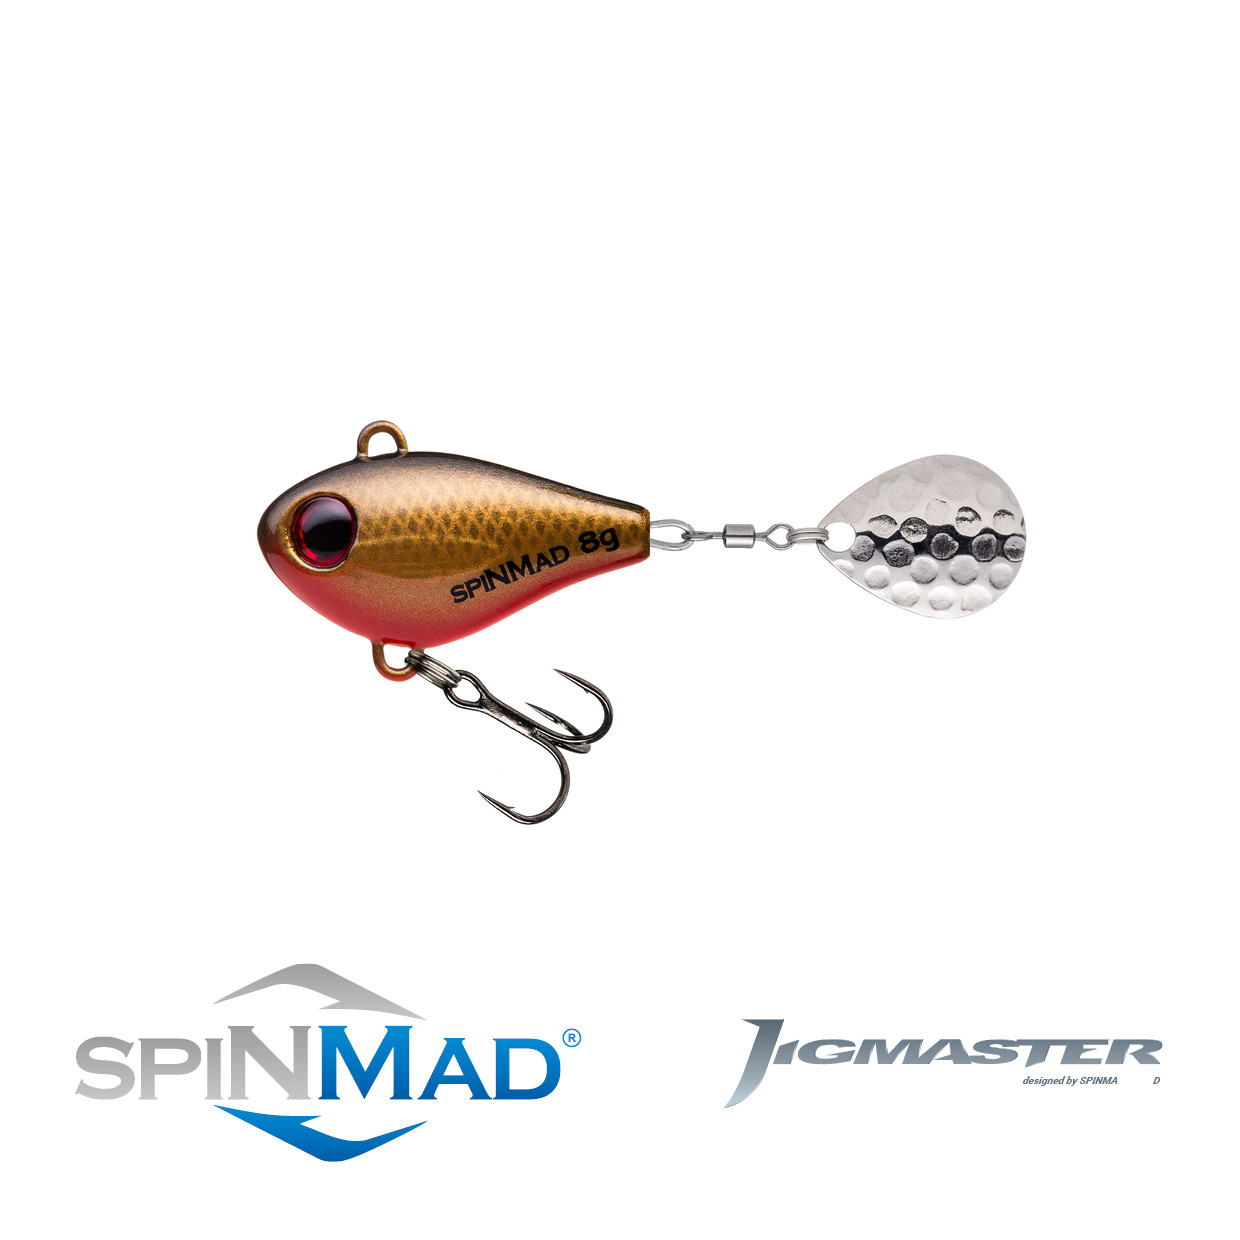 Spinmad Spinnertail Jigmaster 8Gr - 2305